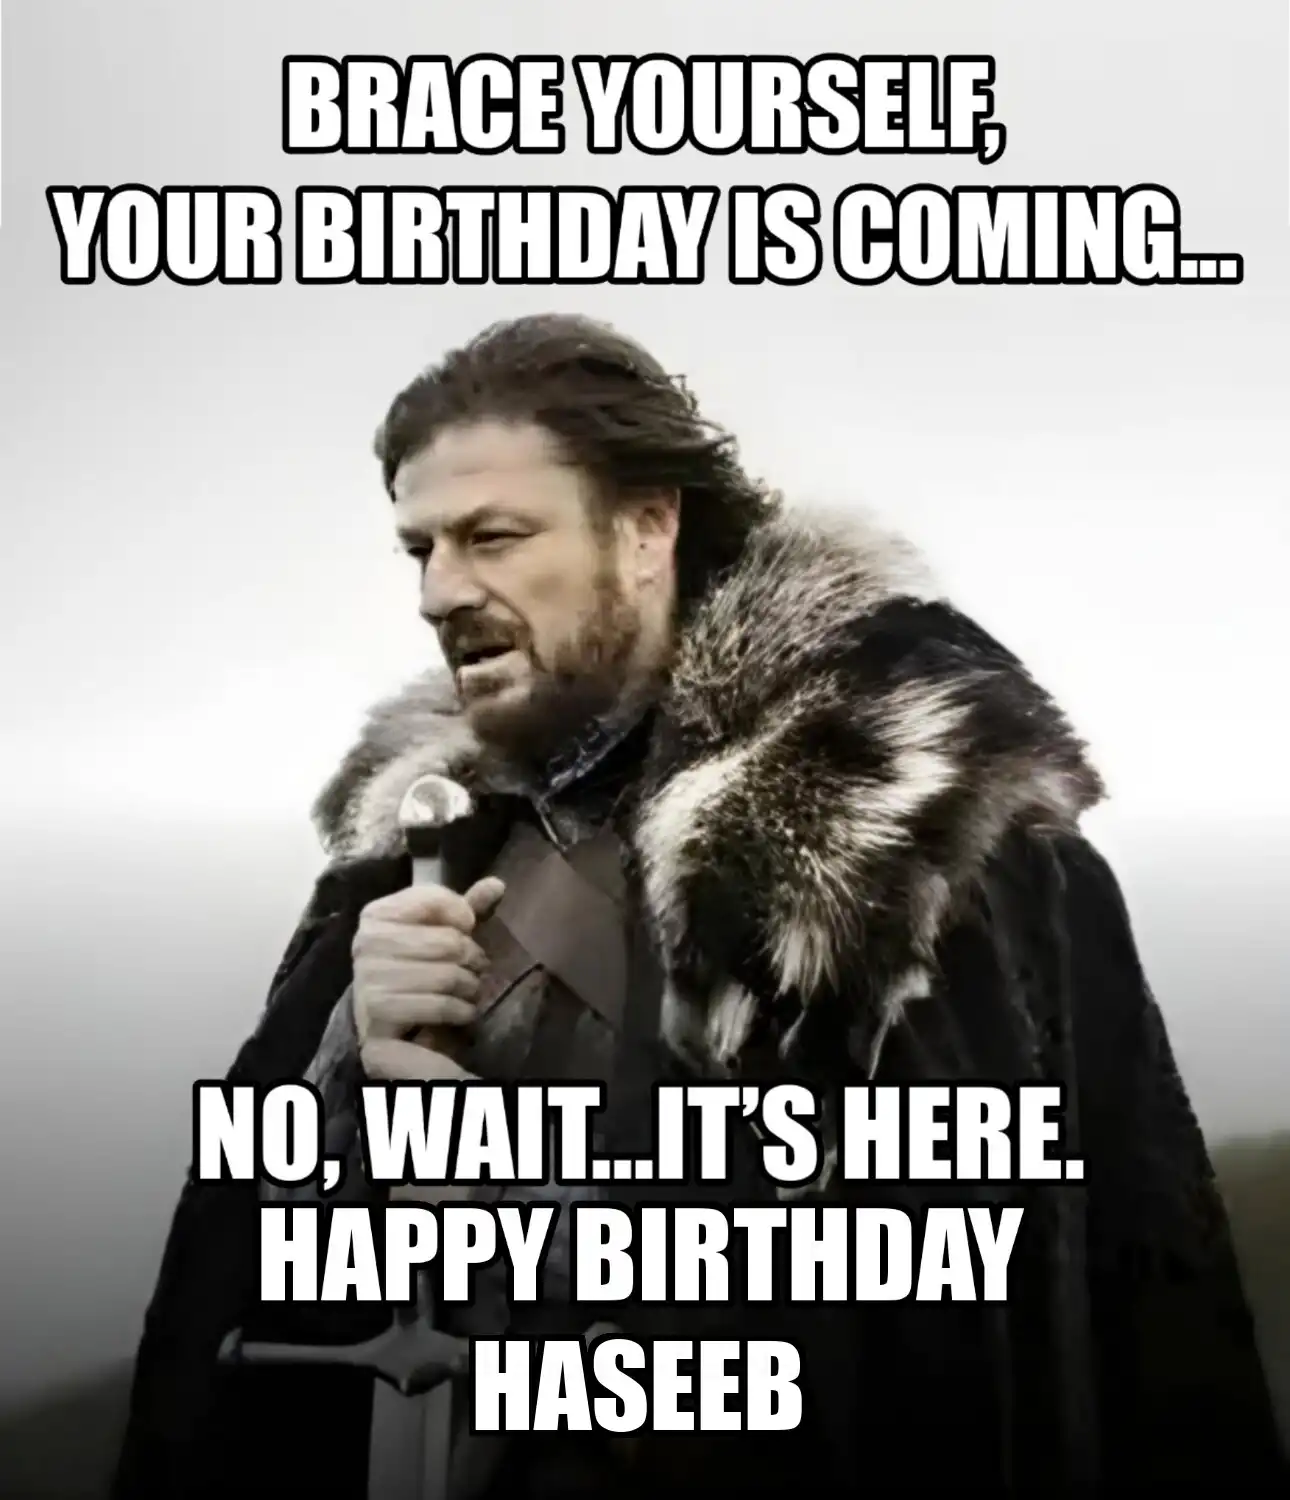 Happy Birthday Haseeb Brace Yourself Your Birthday Is Coming Meme